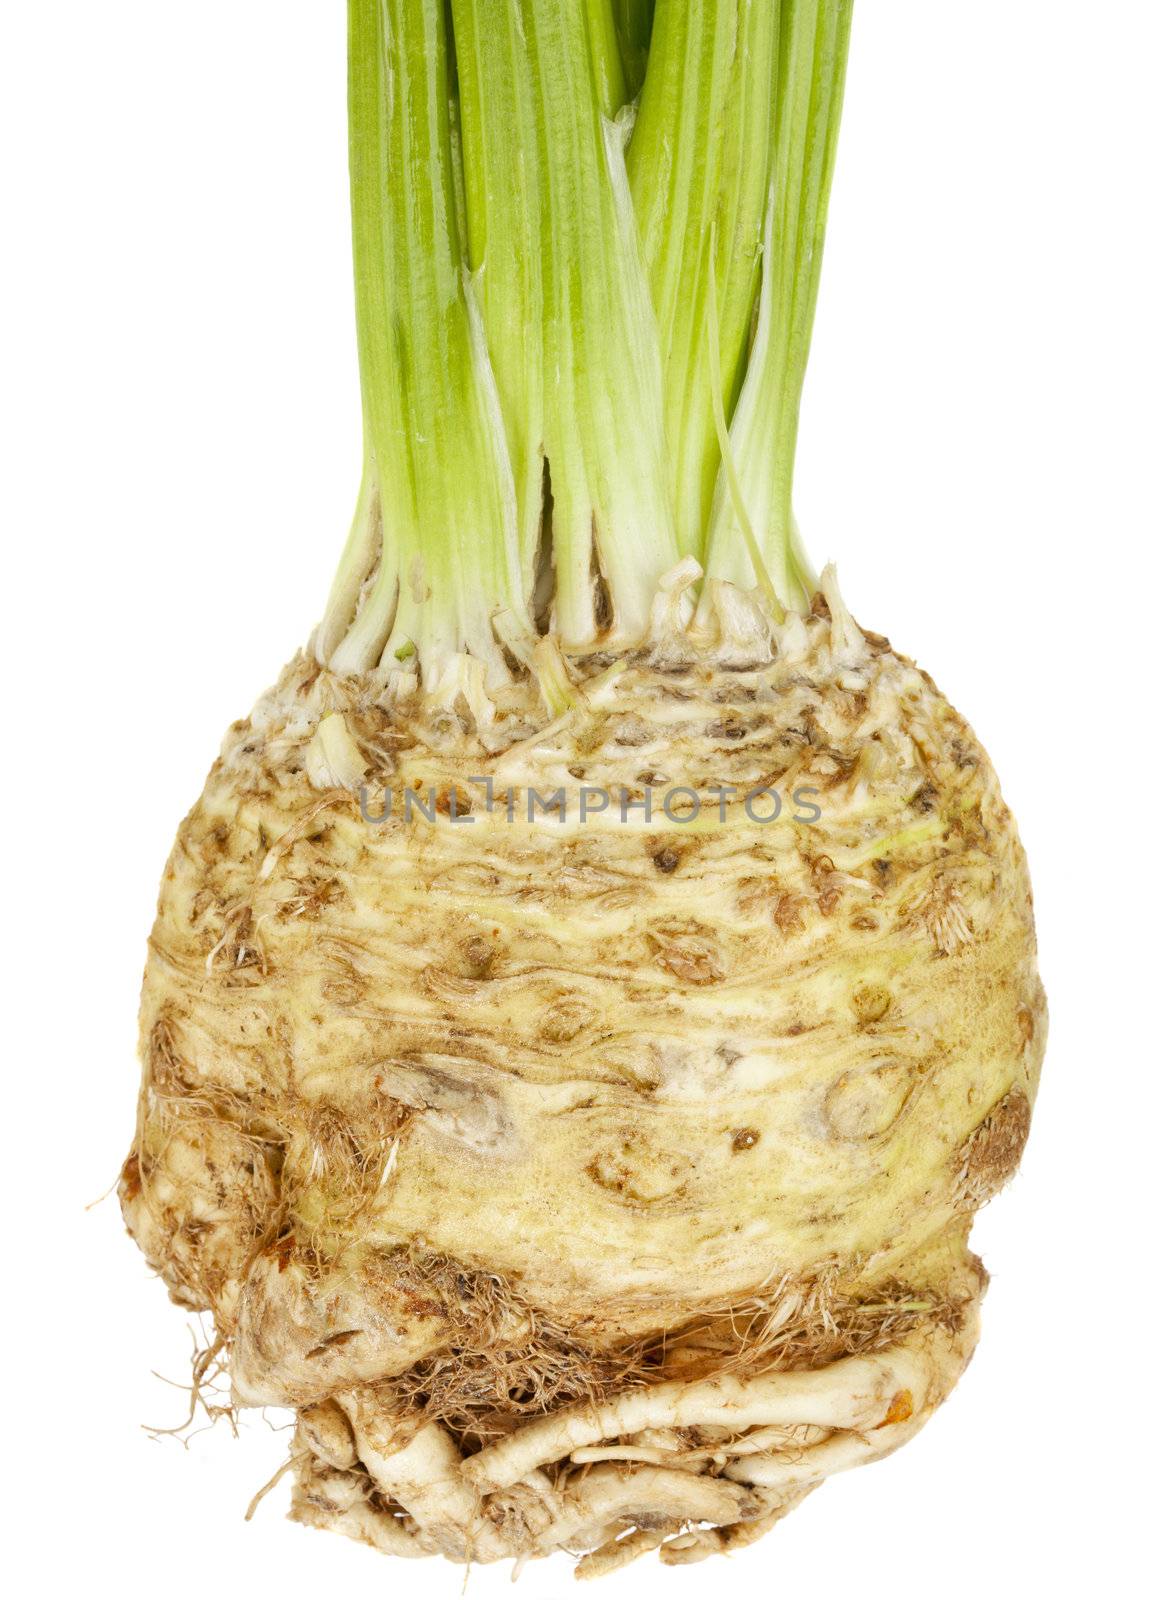 celery root (celeriac) by PixelsAway